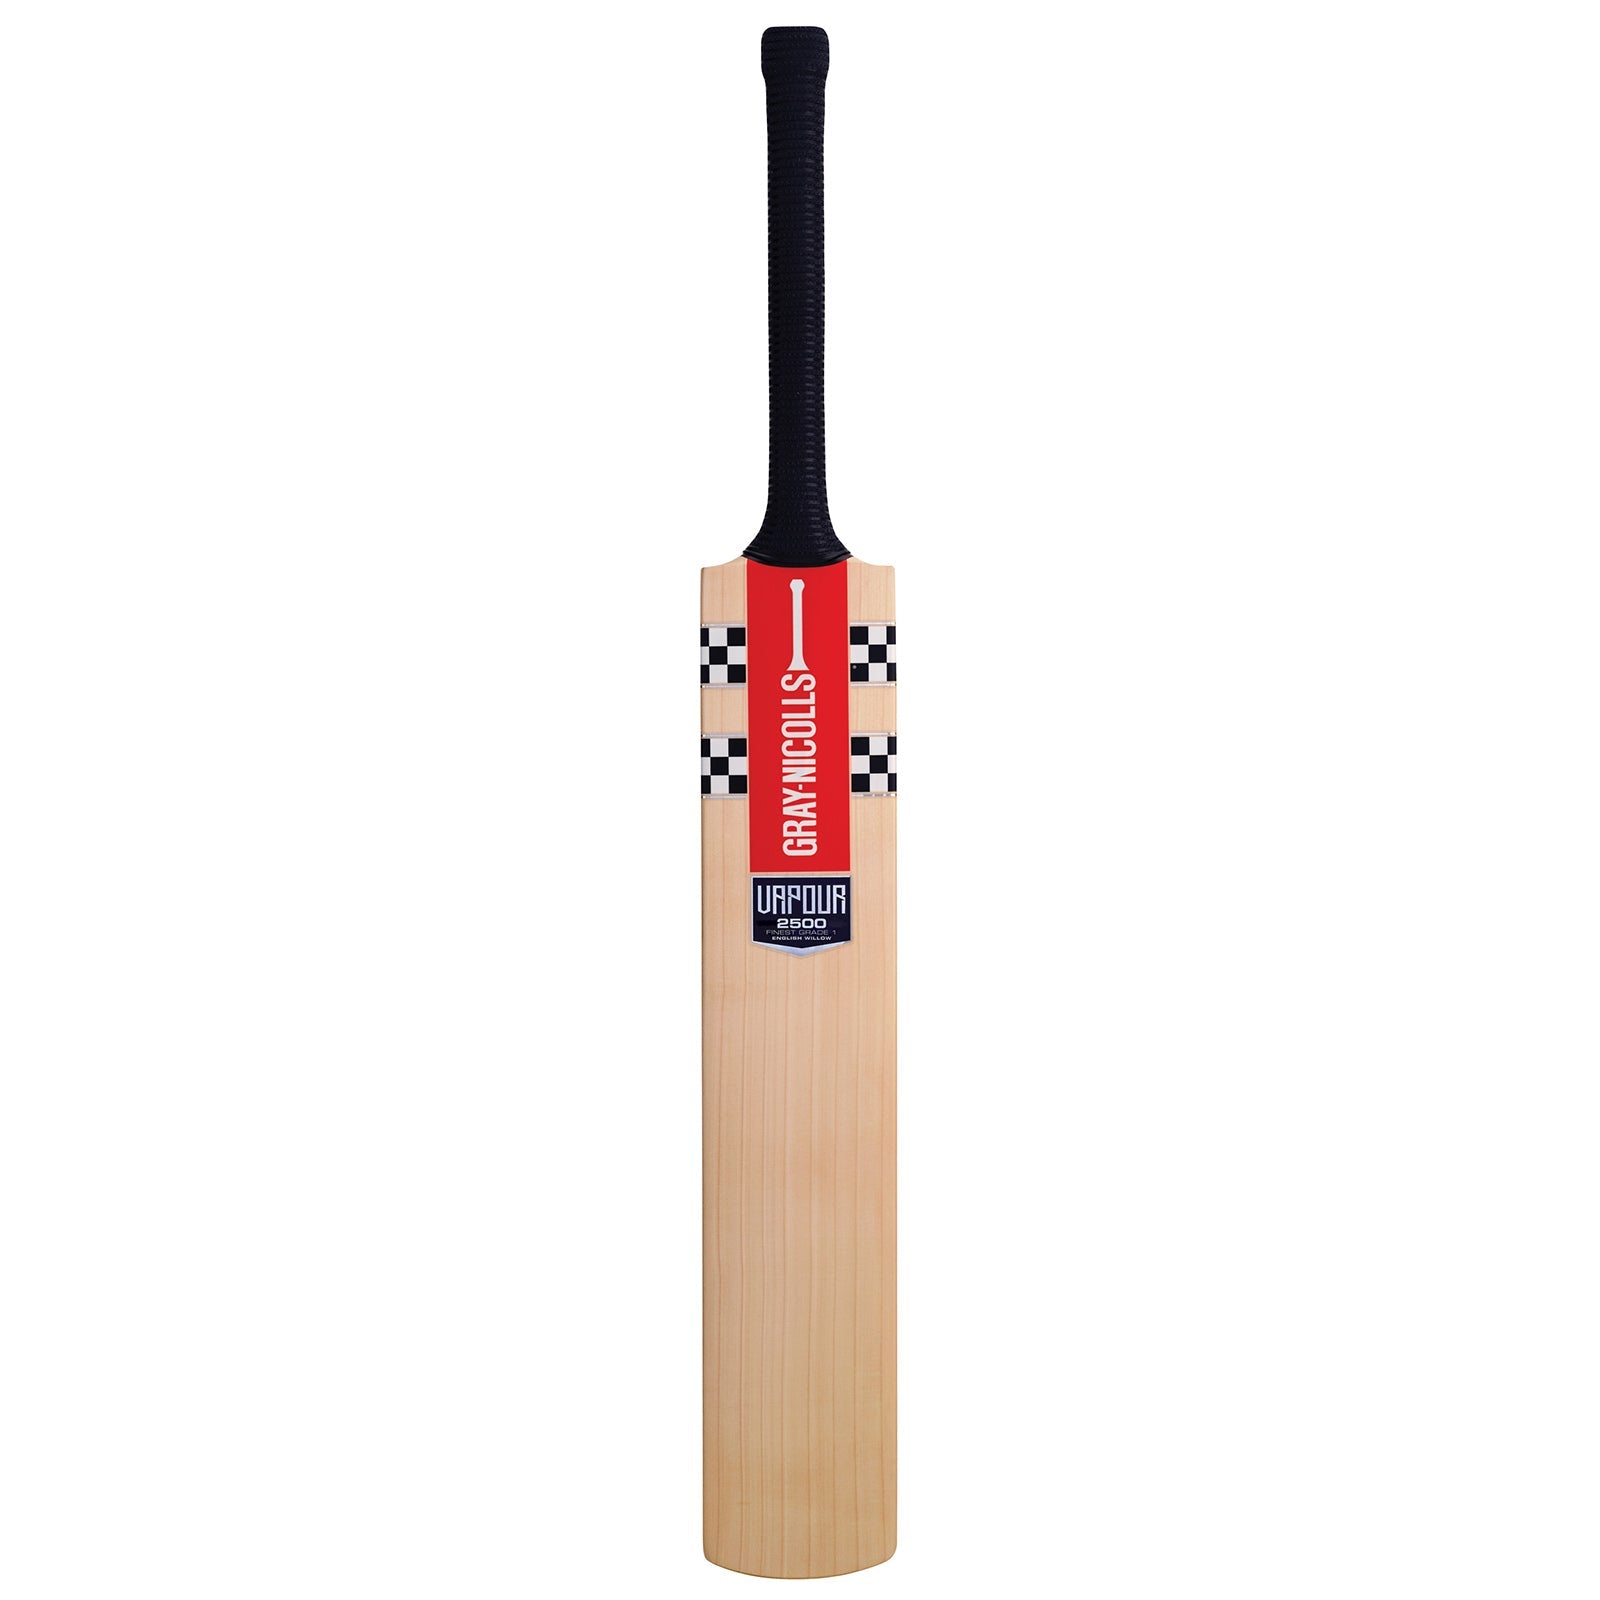 Gray Nicolls Vapour 2500 Cricket Bat - Senior